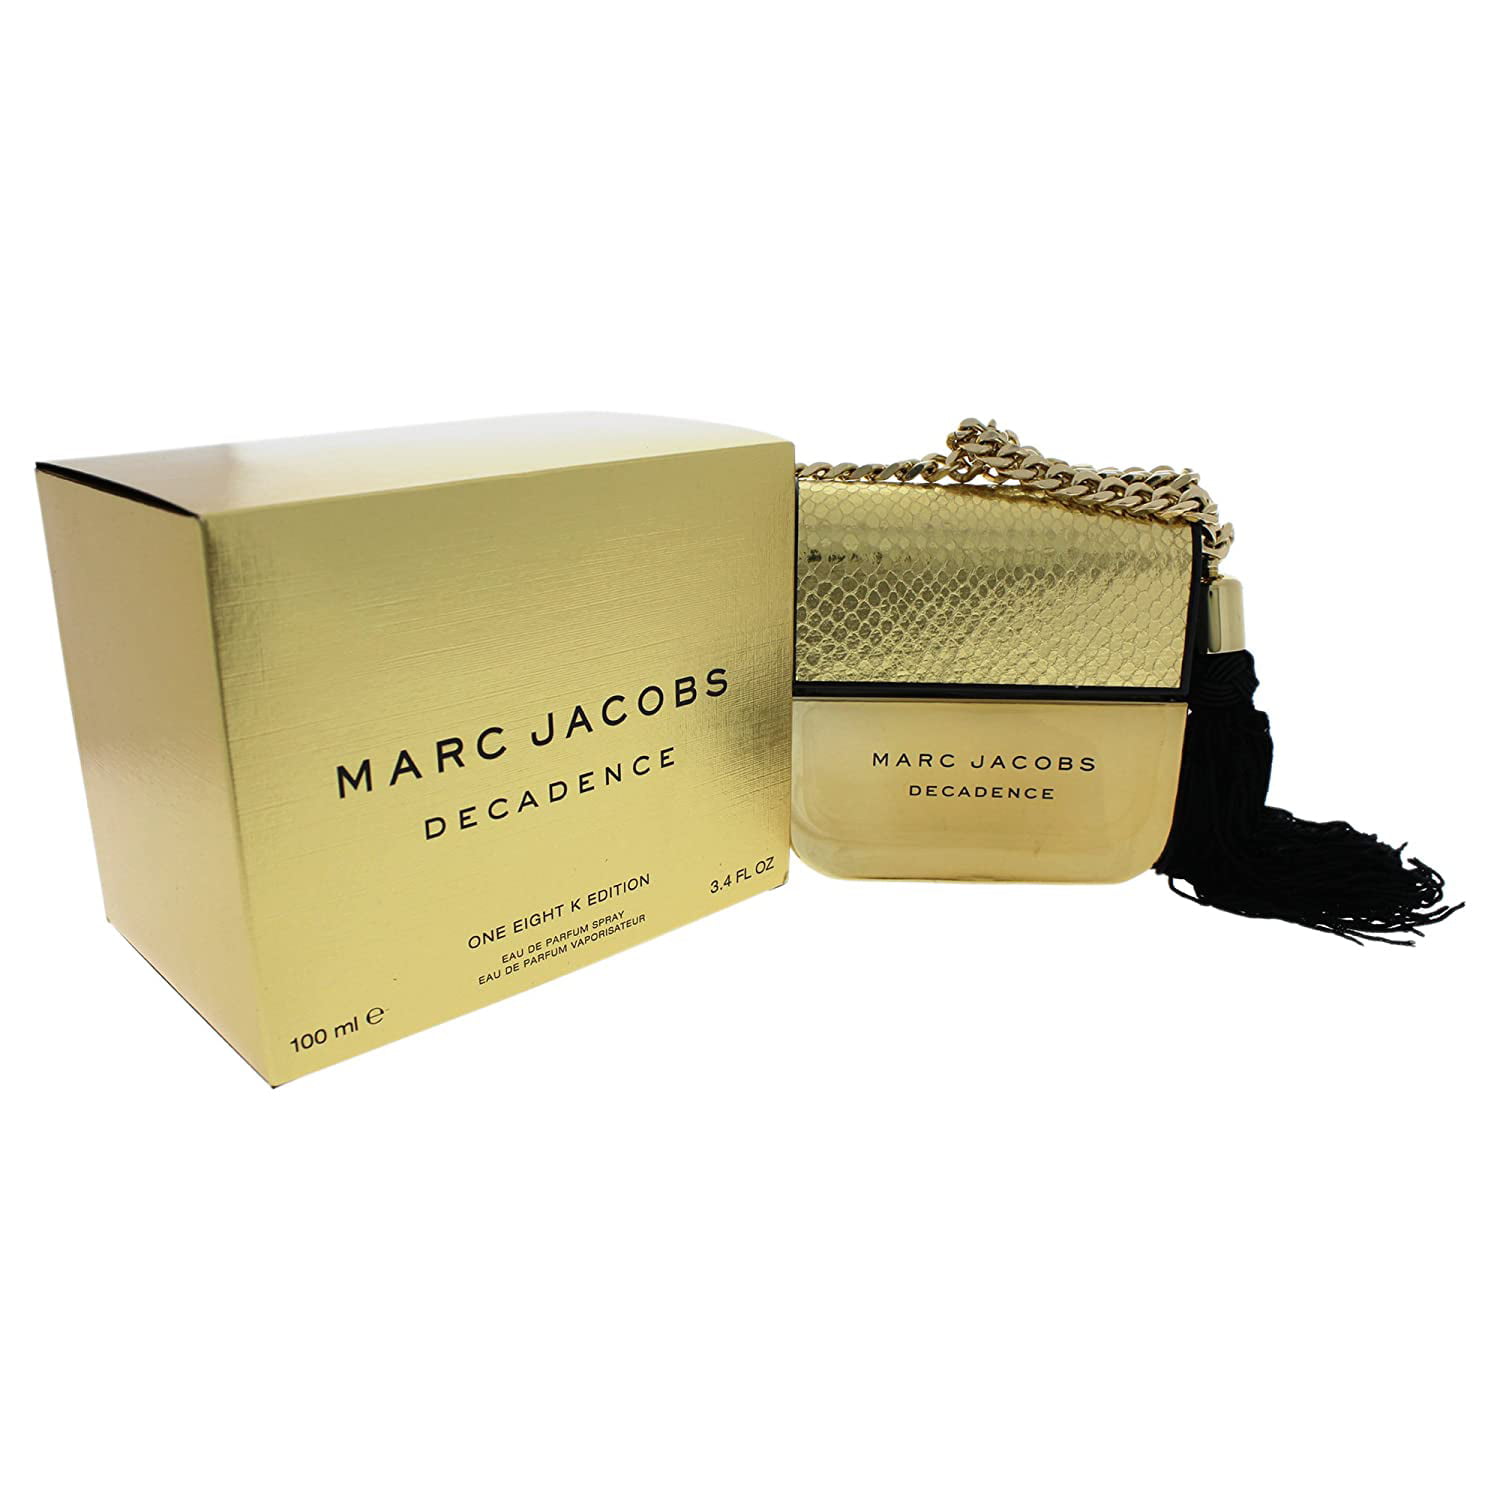 Marc Jacobs Decadence One Eight K Edition EDP 3.4oz